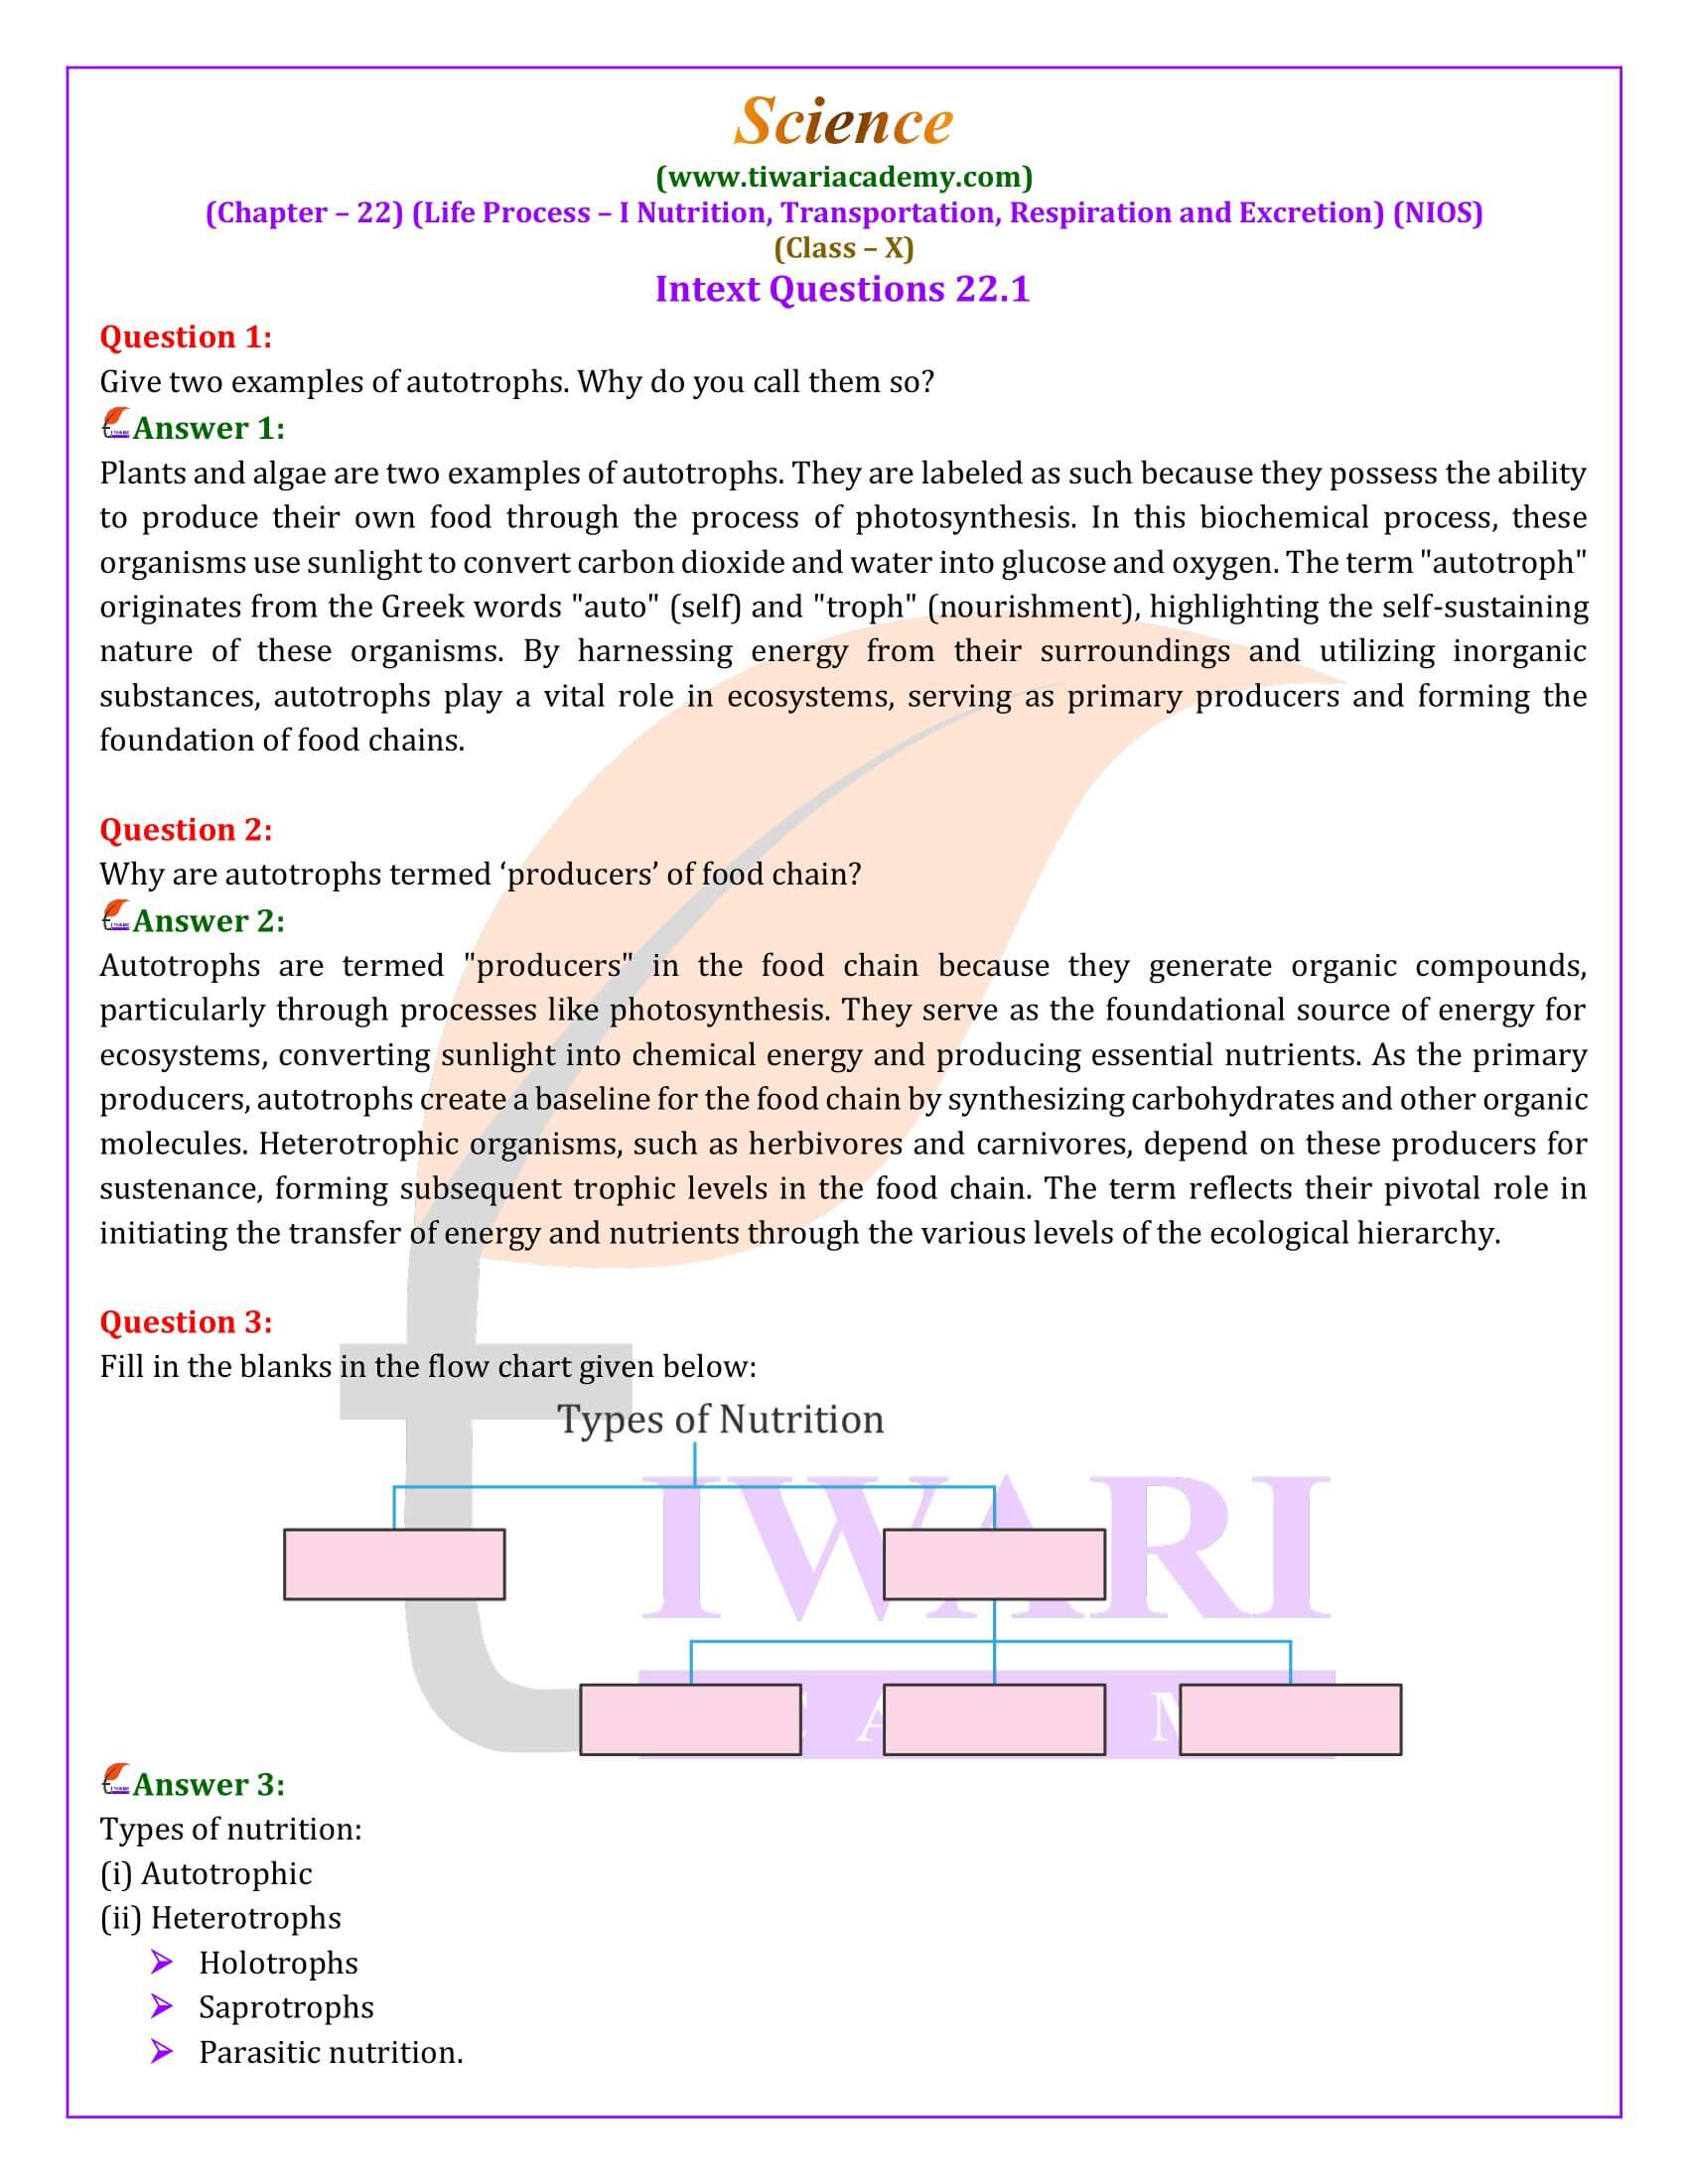 NIOS Class 10 Science Chapter 22 Life Process I: Nutrition, Transportation, Respiration